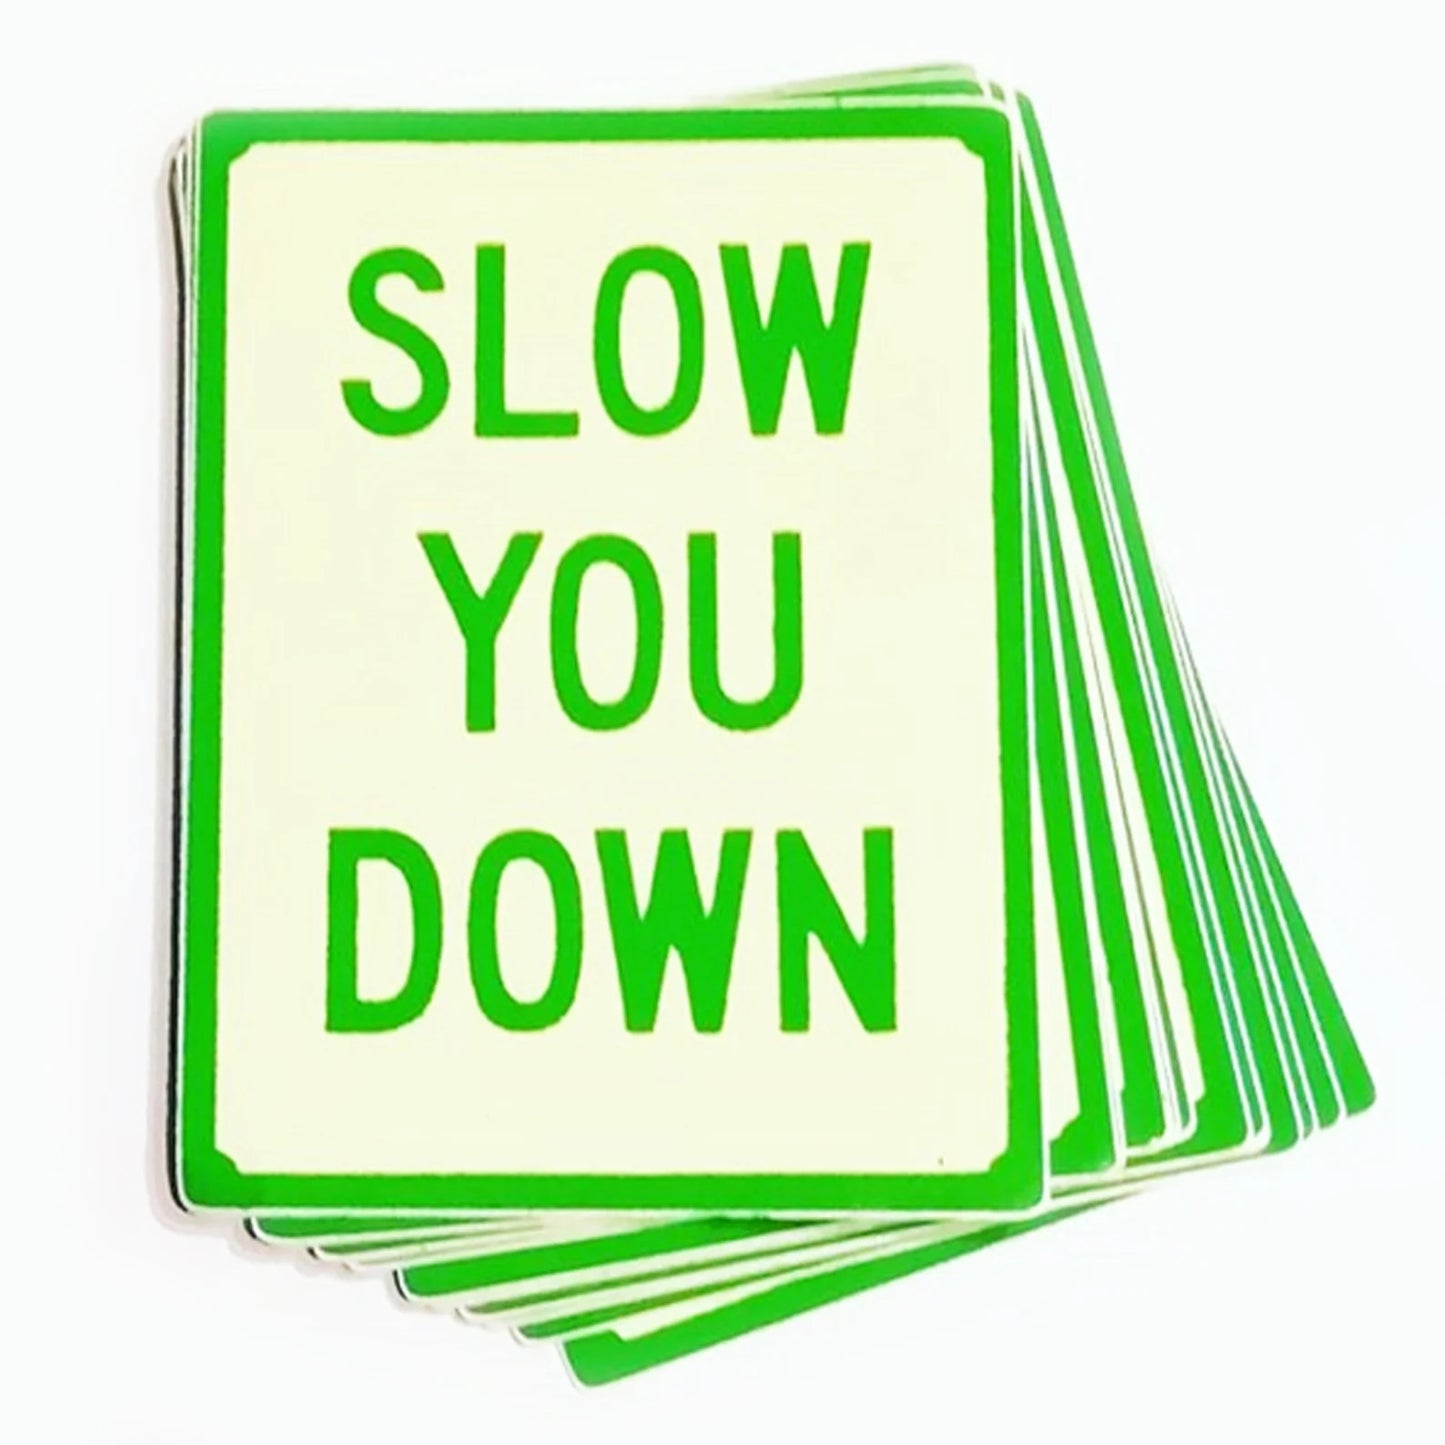 Slow you down sticker